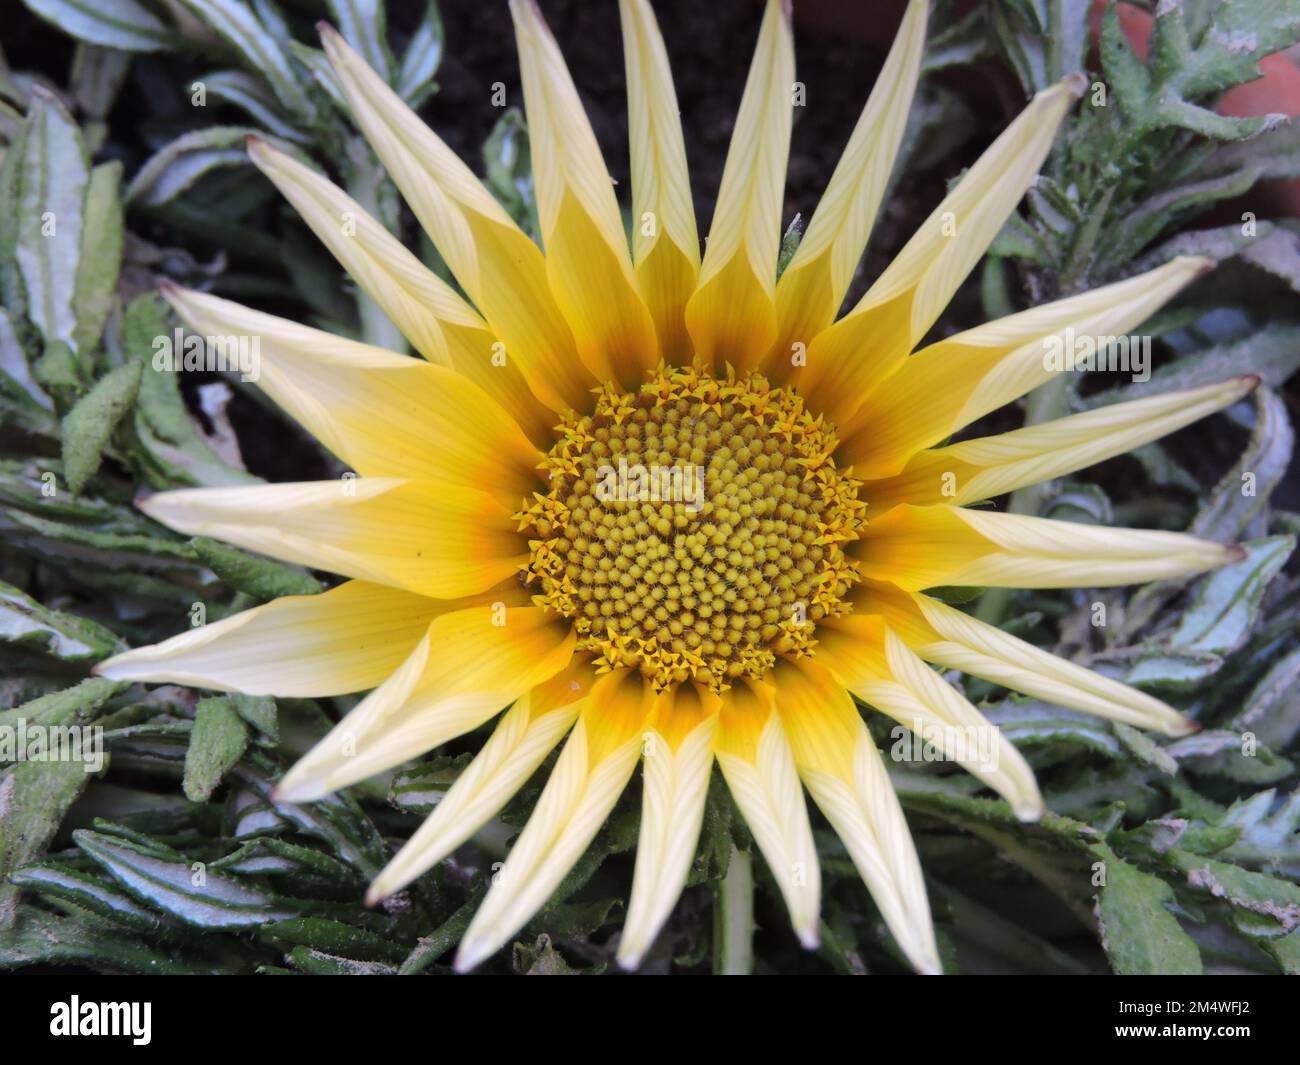 Garden flowering plant- Gazania rigens. Family- Asteraceae. Common name- Treasure Flower, African Daisy, Gazania. Stock Photo